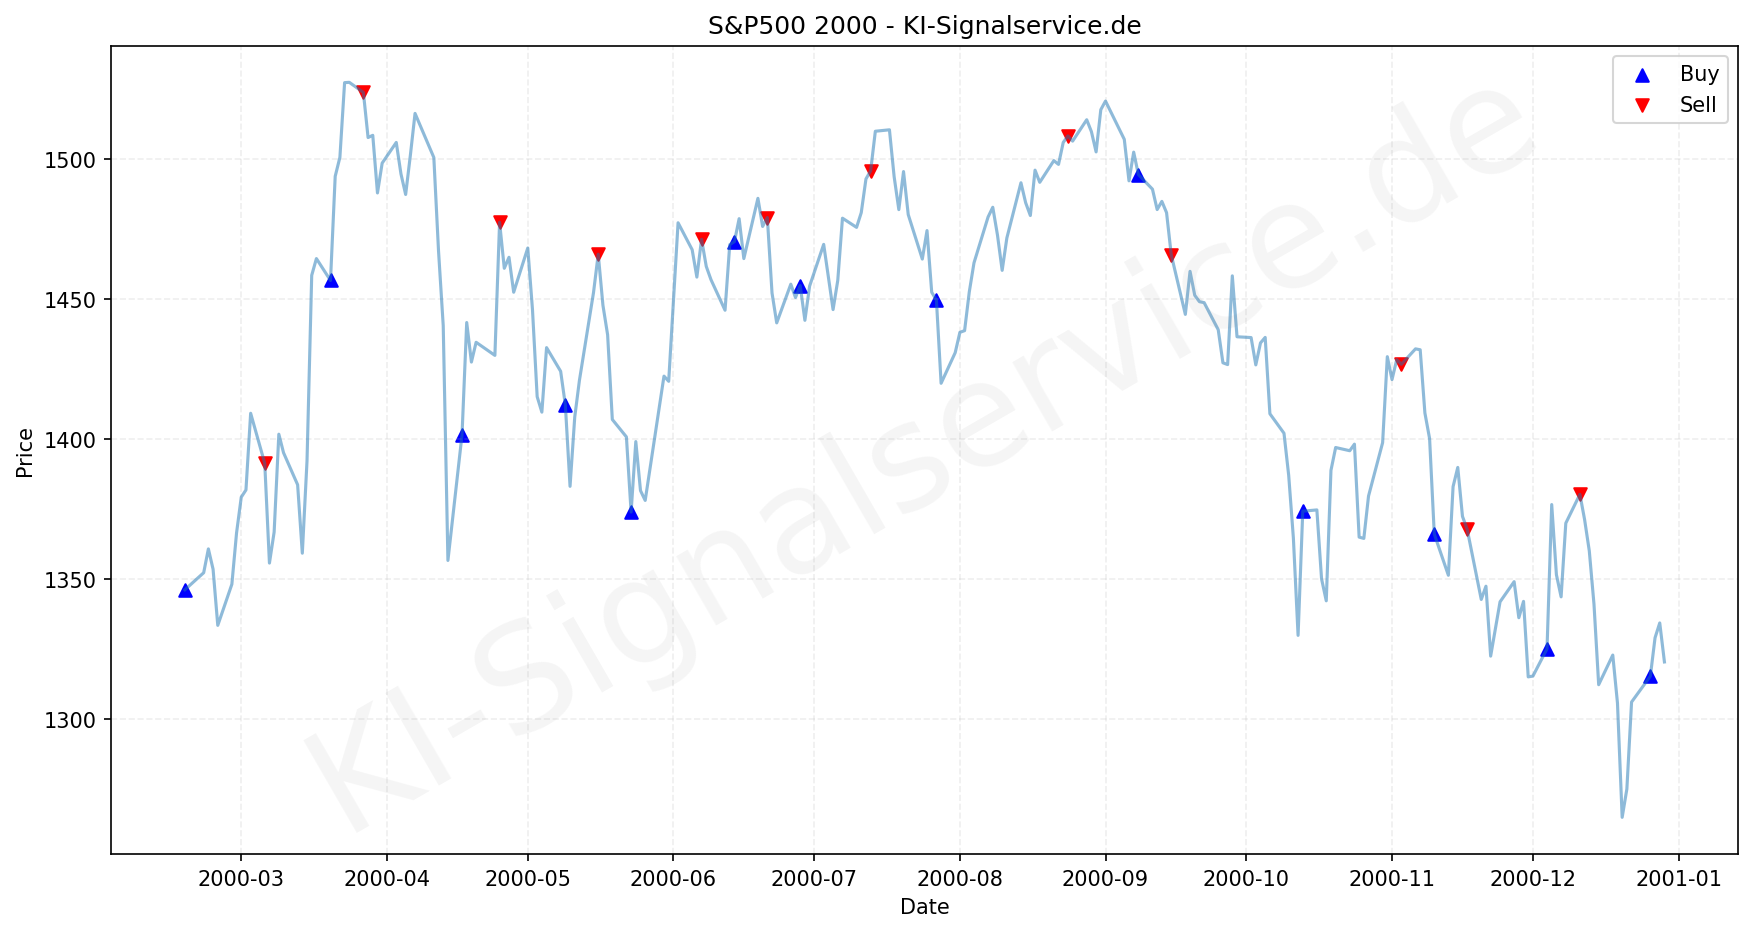 SP500 Index Performance Chart - KI Tradingsignale 2000